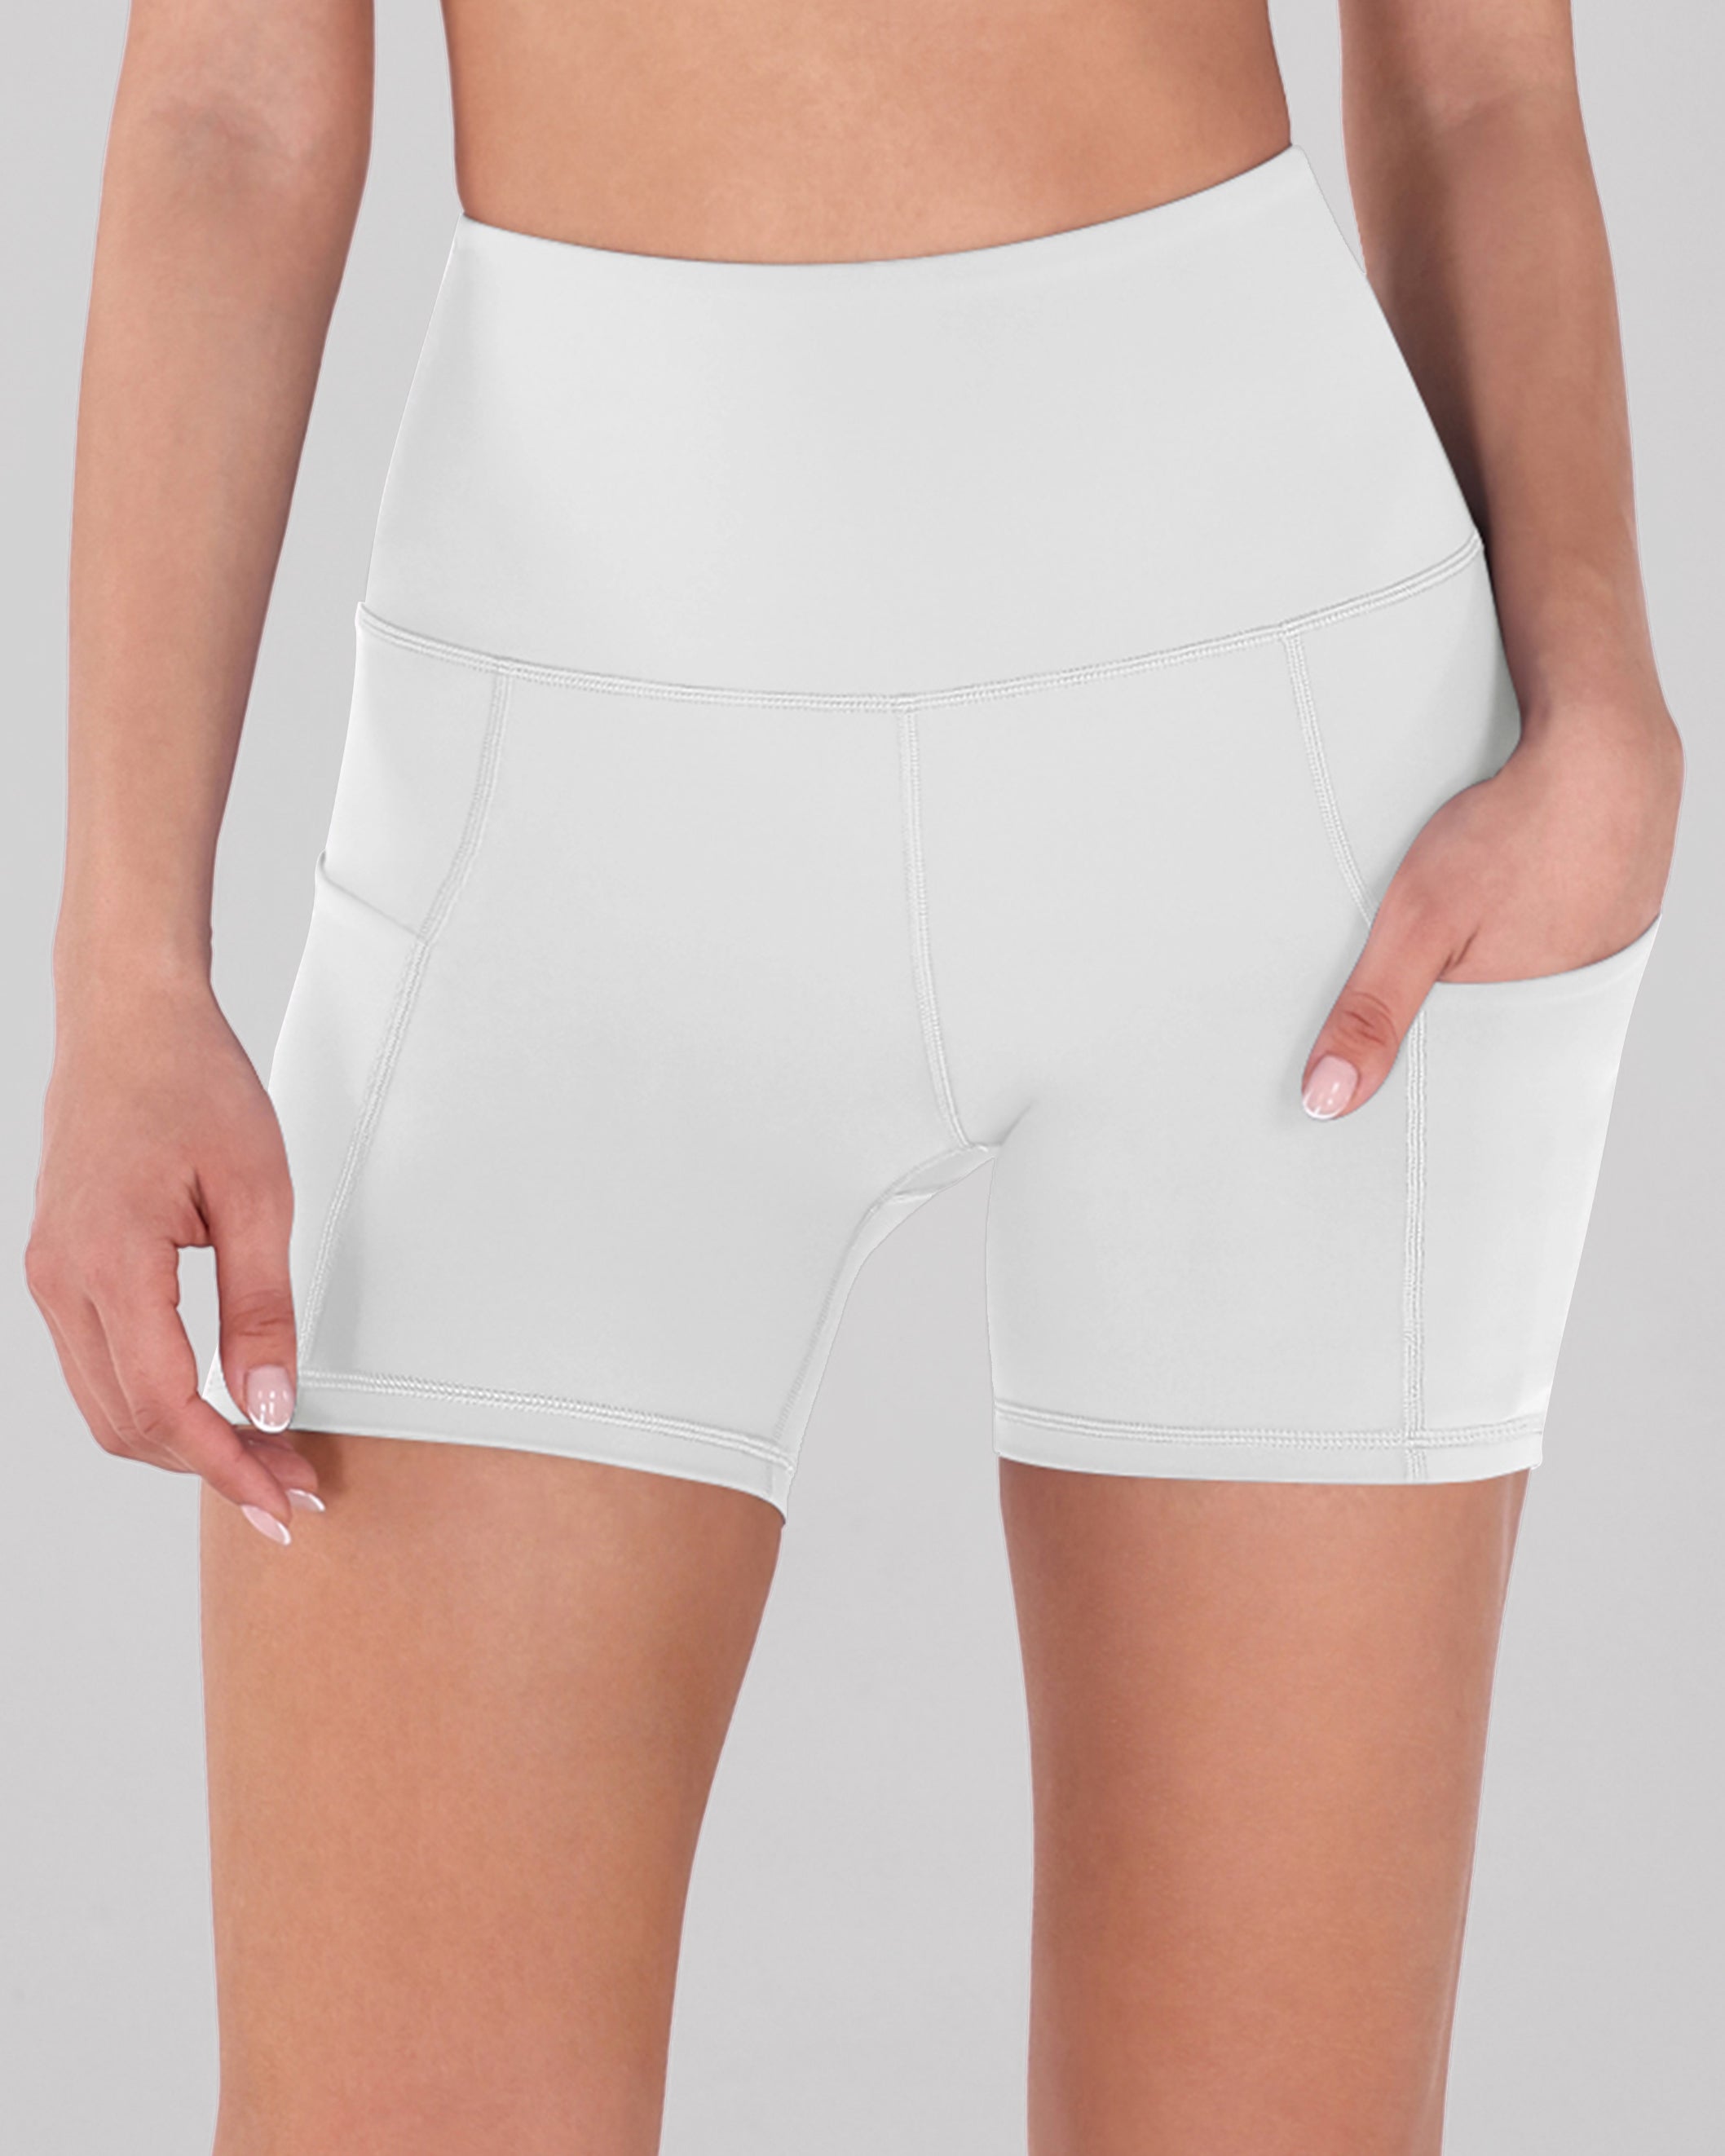 5" High Waist Tummy Control Shorts with Pockets White - ododos